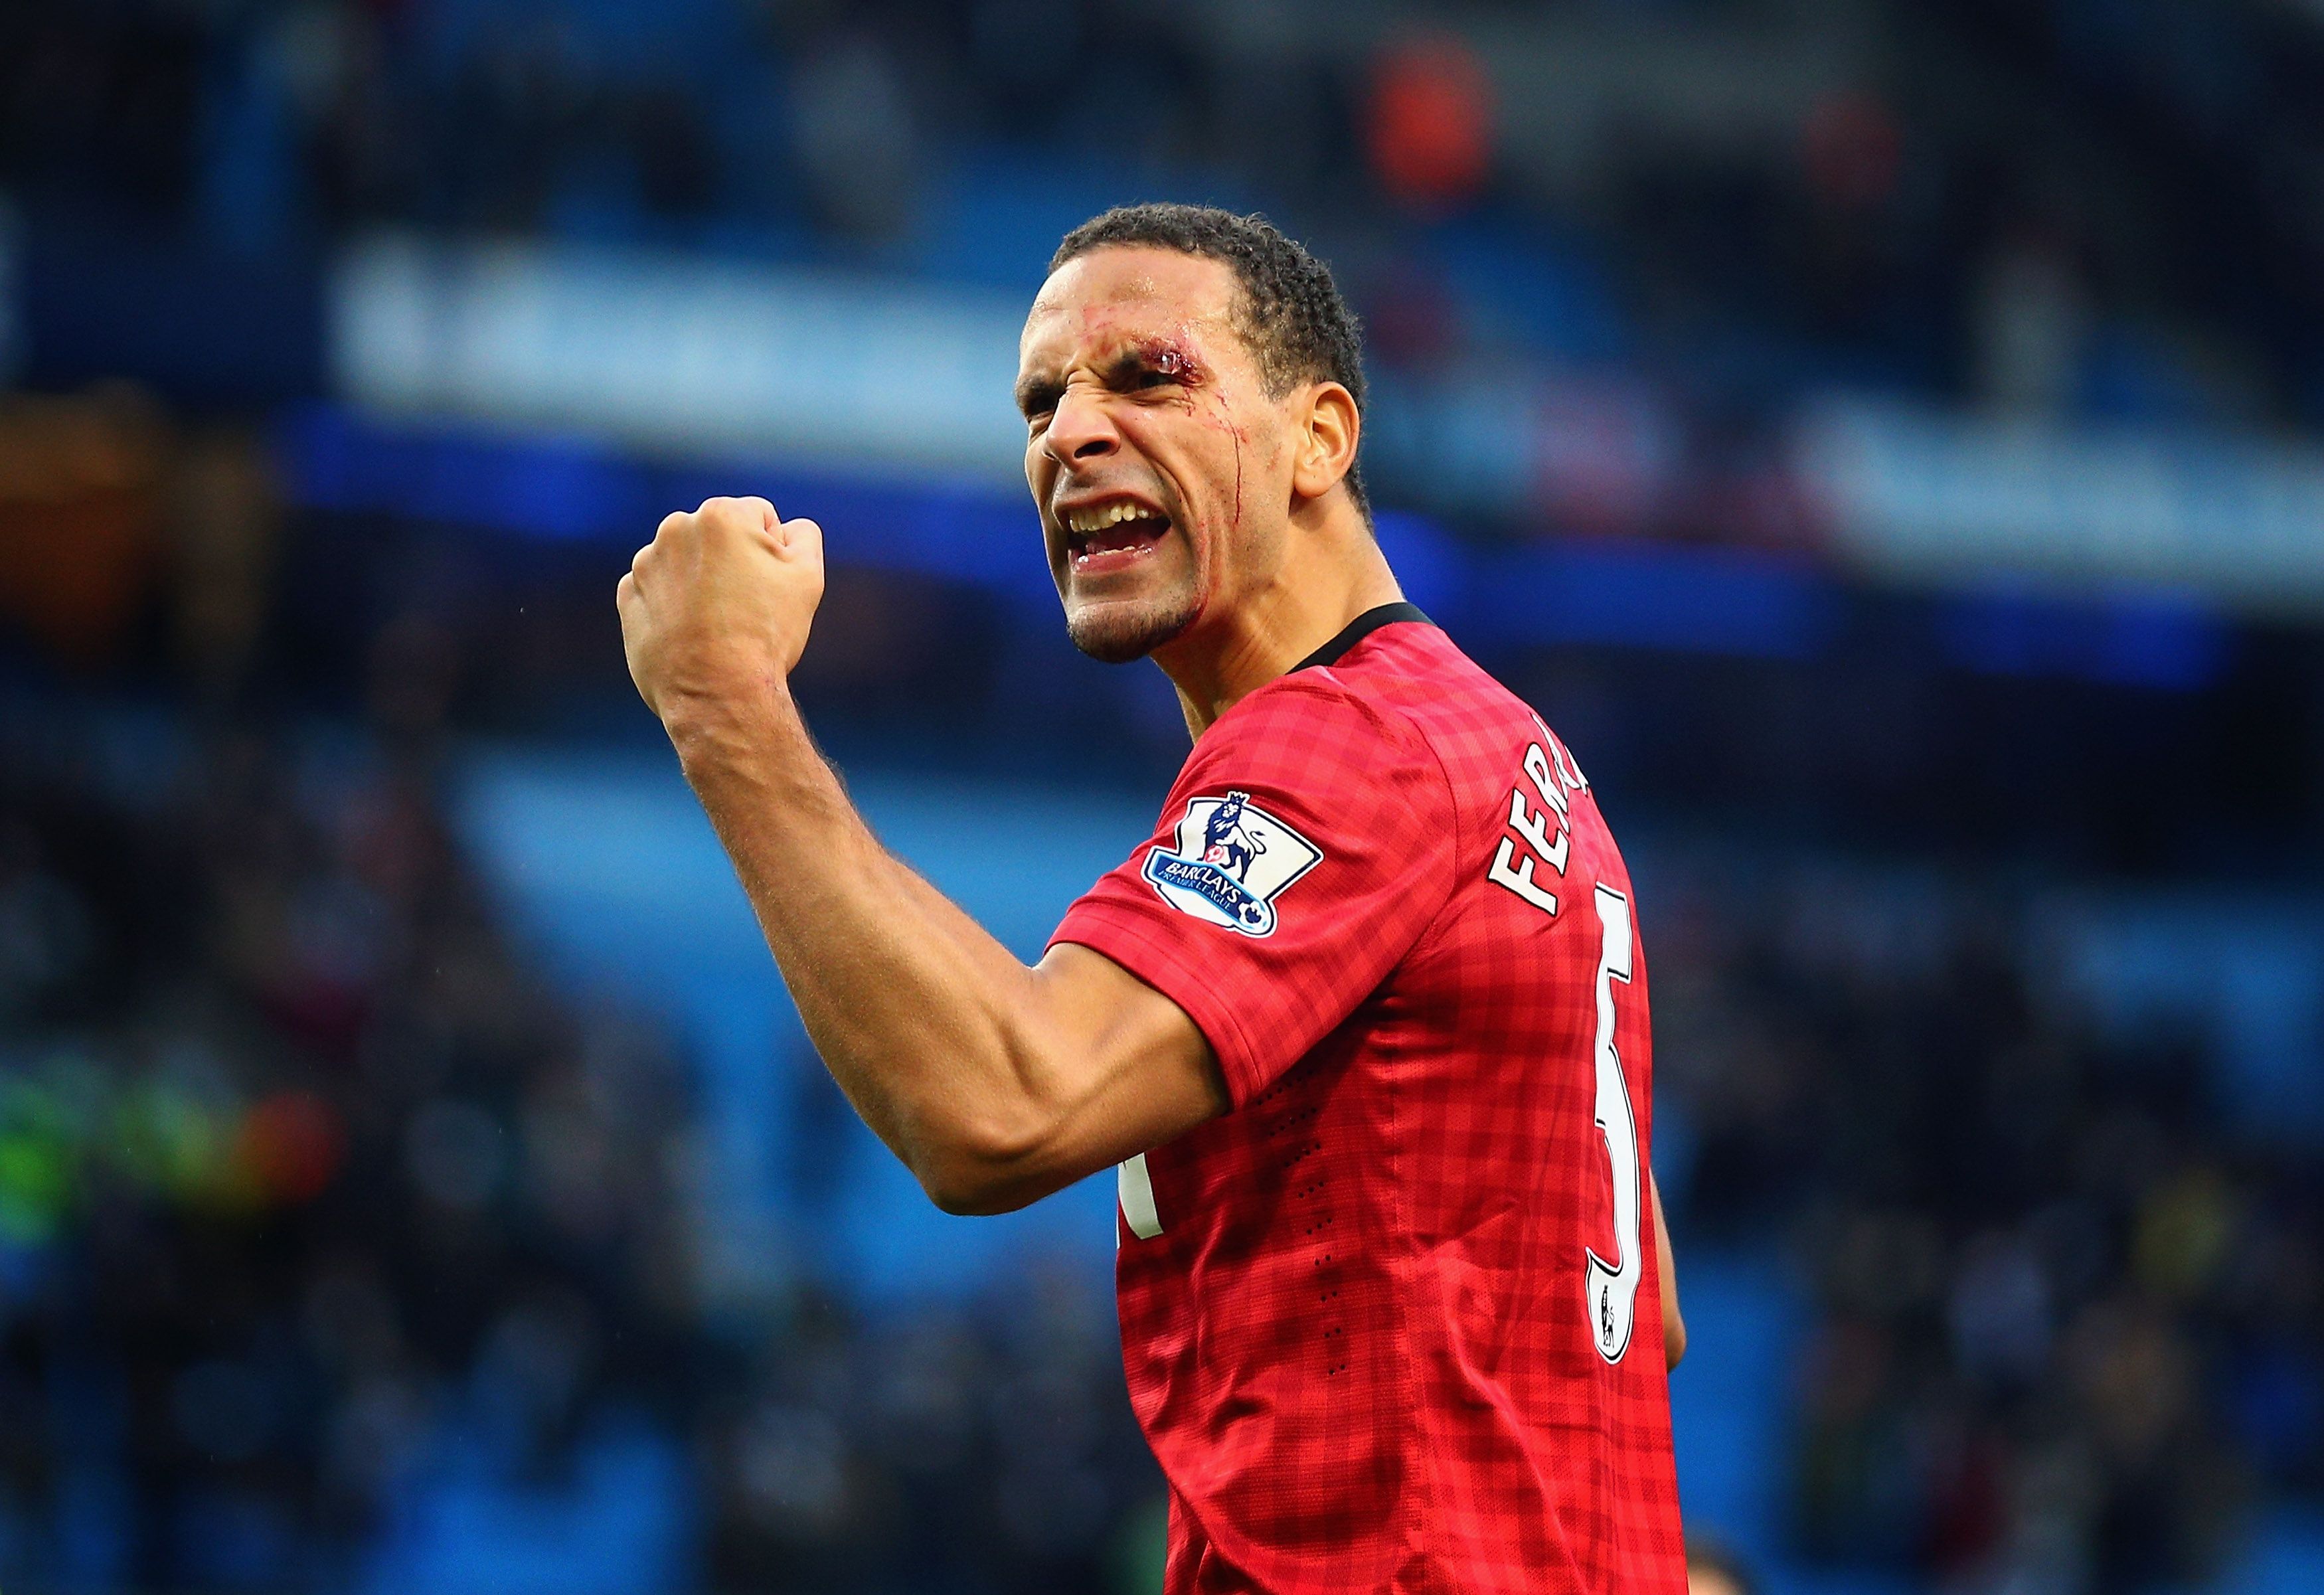  Rio Ferdinand of Manchester United celebrates